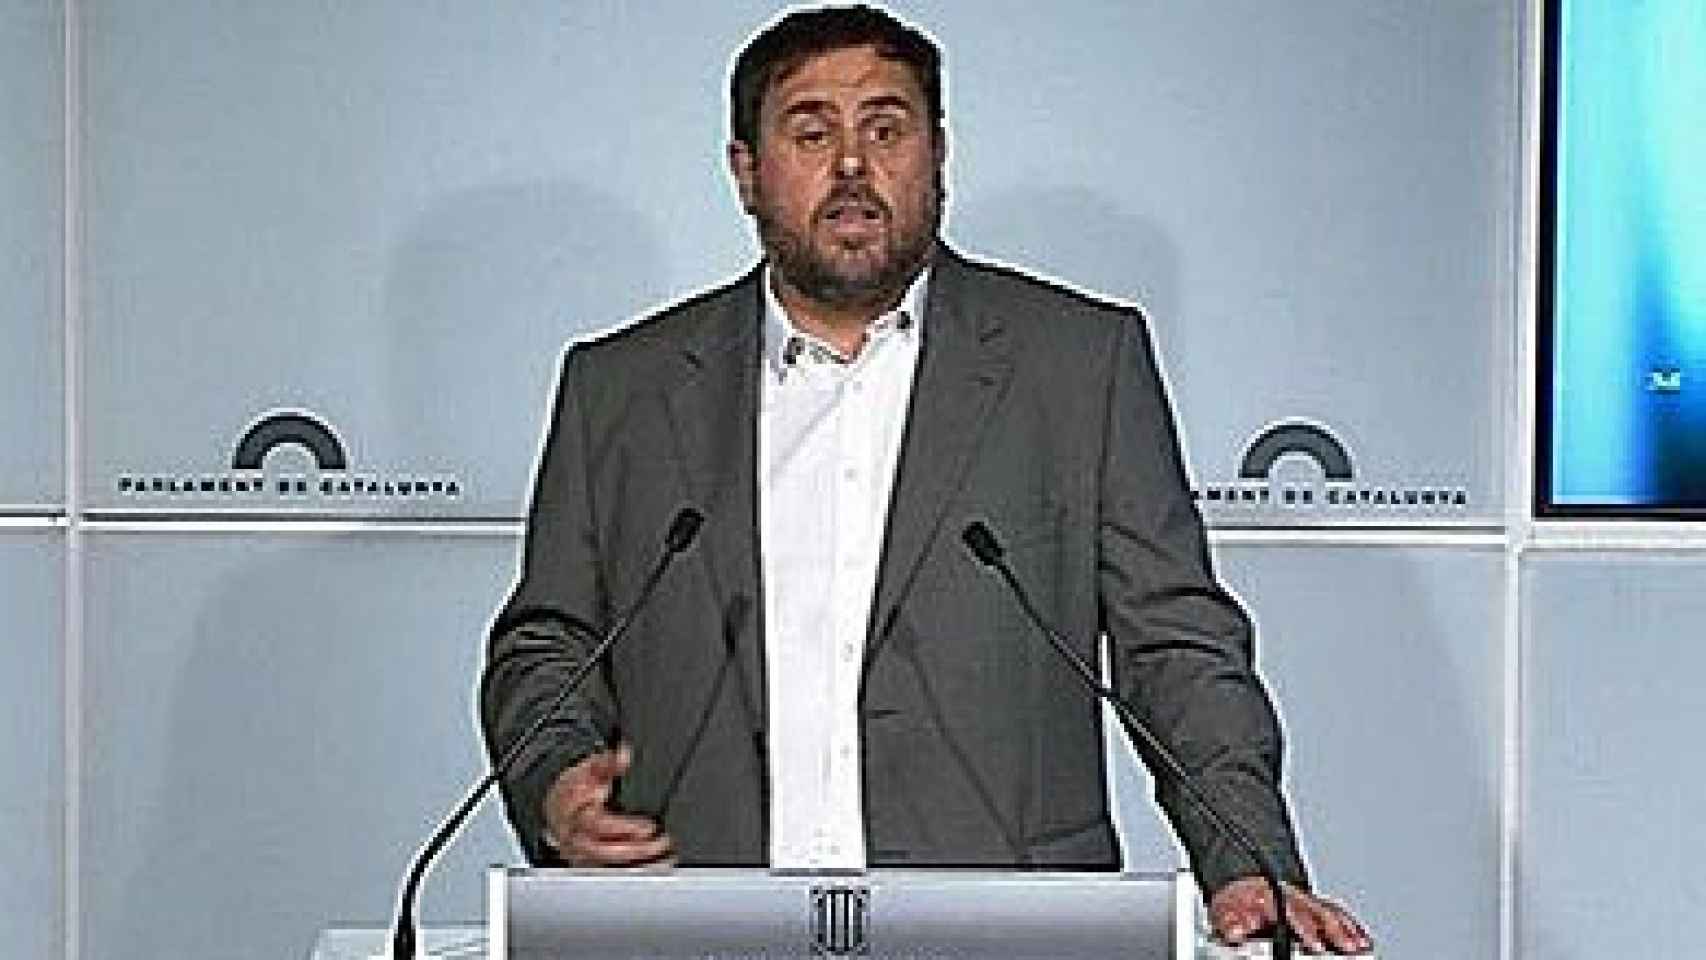 El líder de ERC, Oriol Junqueras